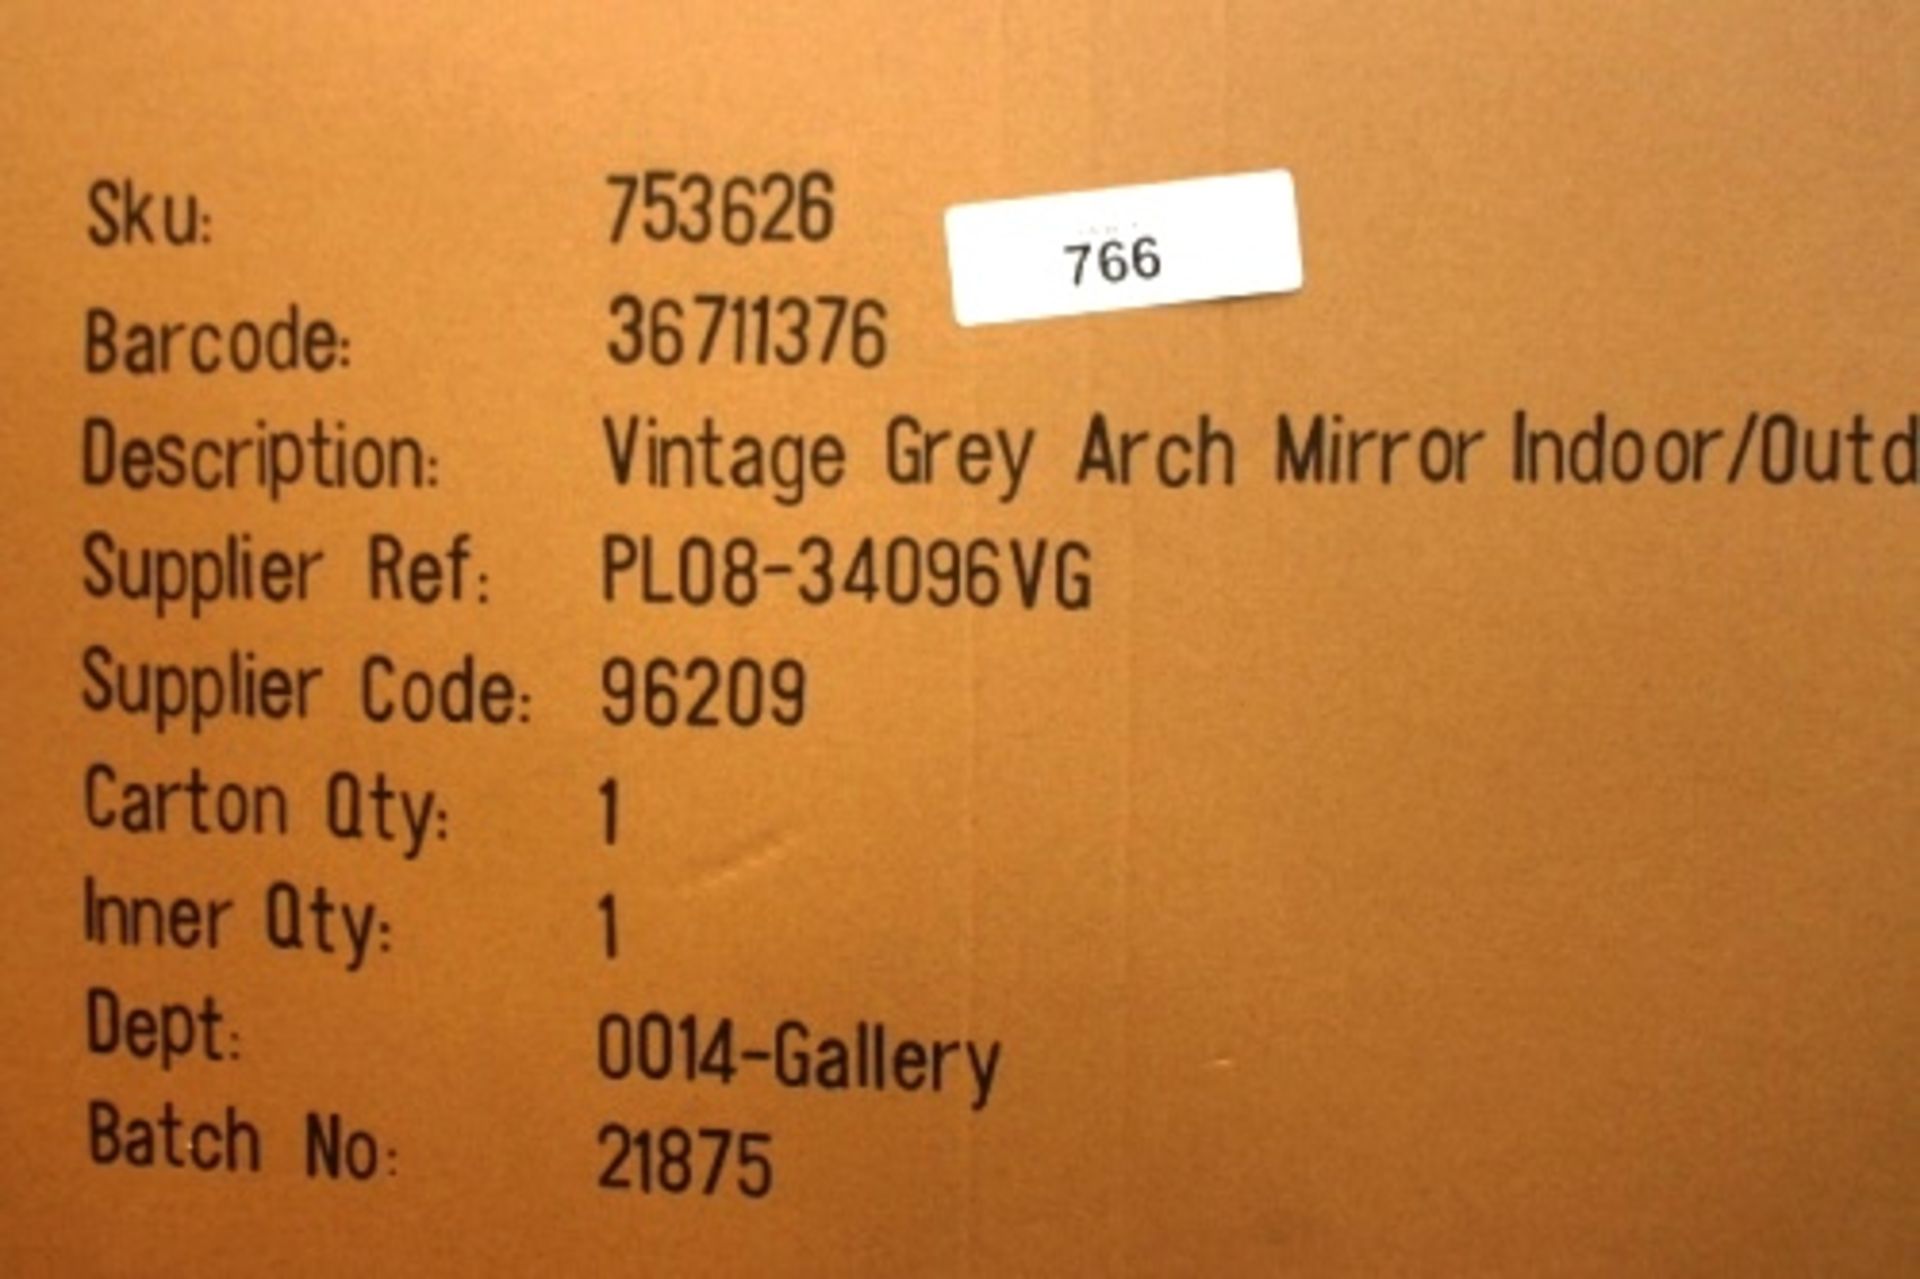 1 x vintage grey arch mirror, indoor/outdoor, model PL08-34096VG - New in box (GSF11)